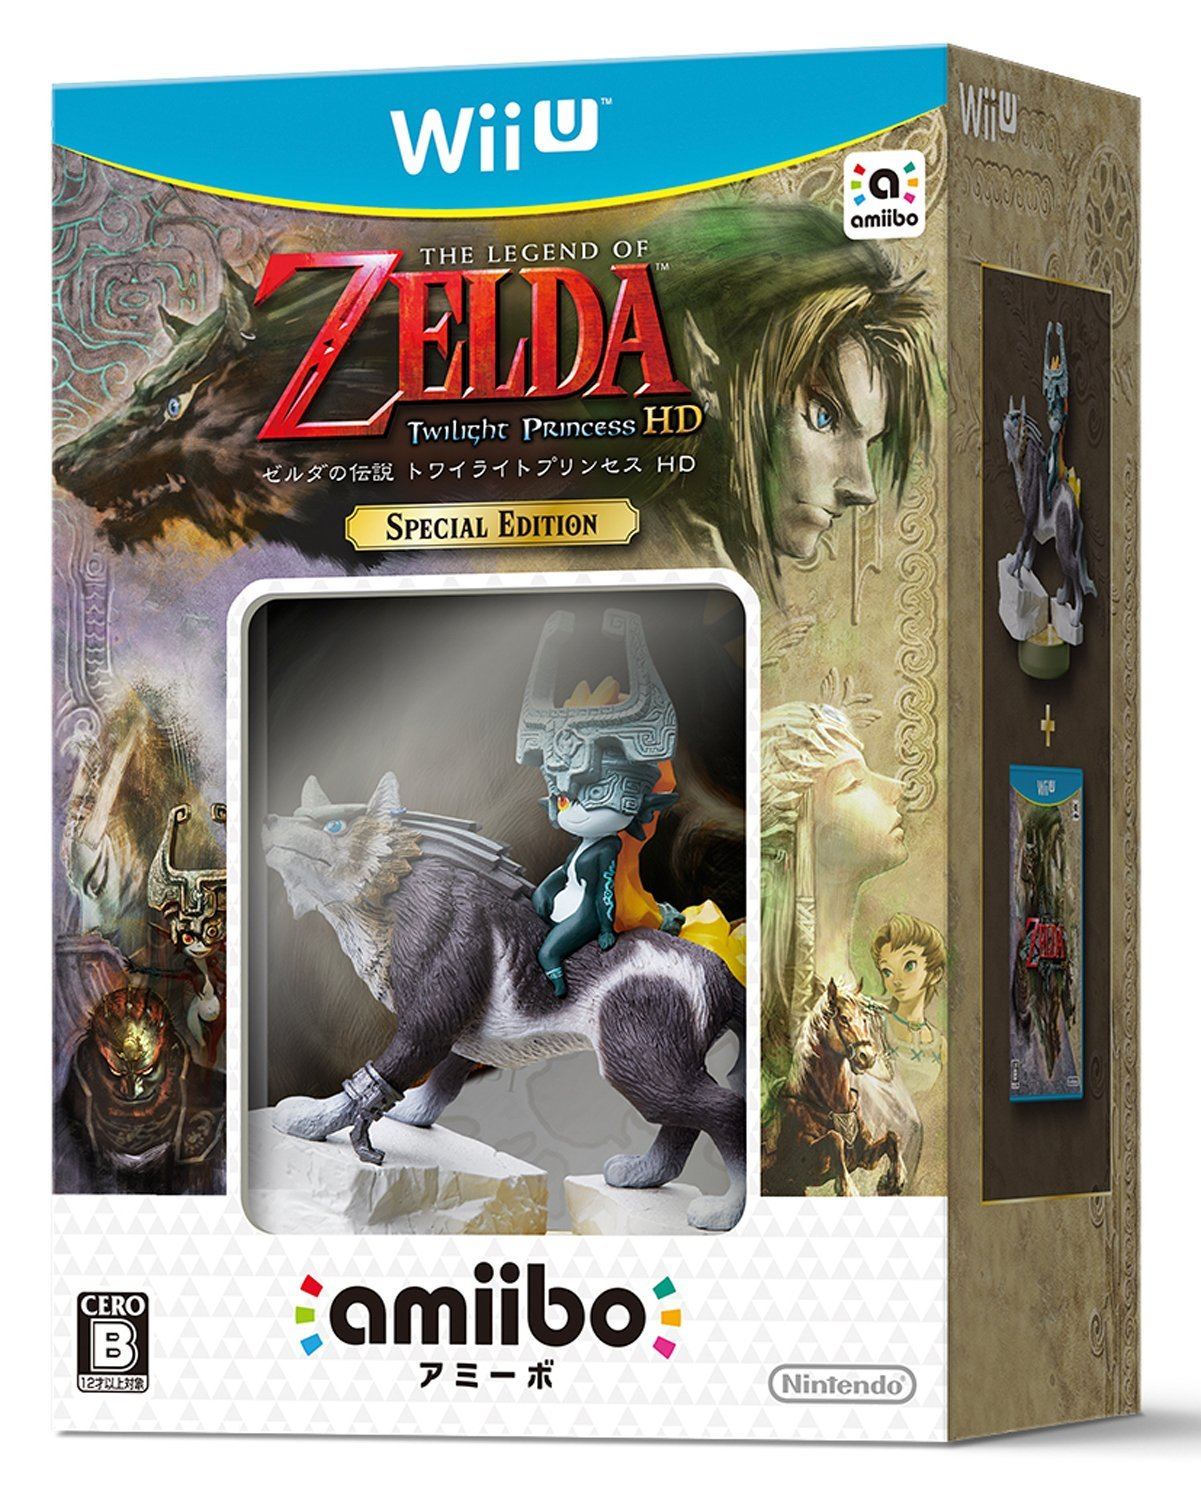 The Legend of Zelda: Twilight Princess HD [Special Edition] for Wii U